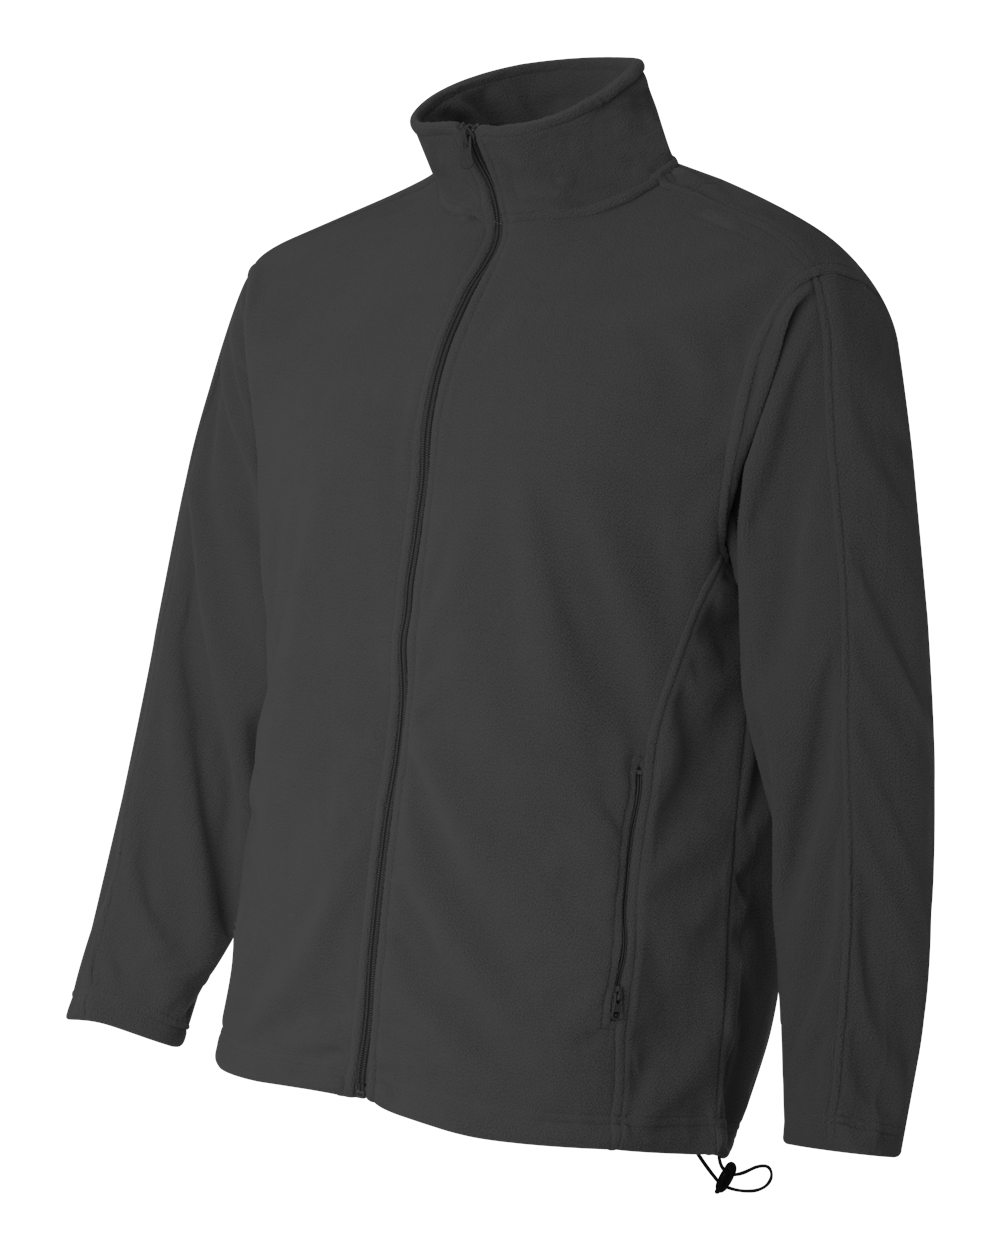 FeatherLite 3301 Microfleece Full-Zip Jacket